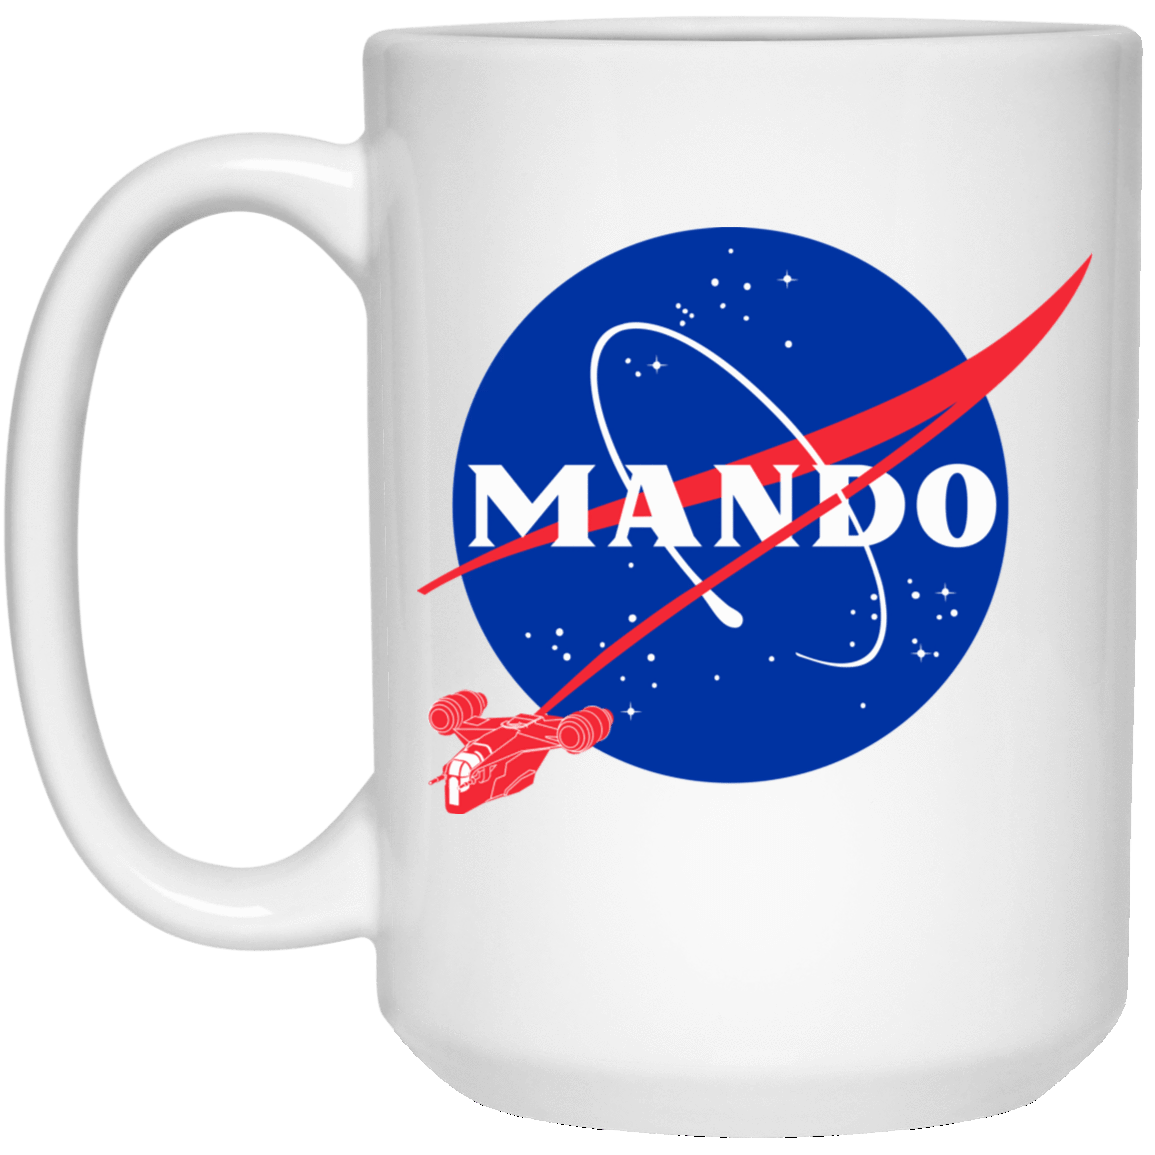 Drinkware White / One Size MANDO 15oz Mug